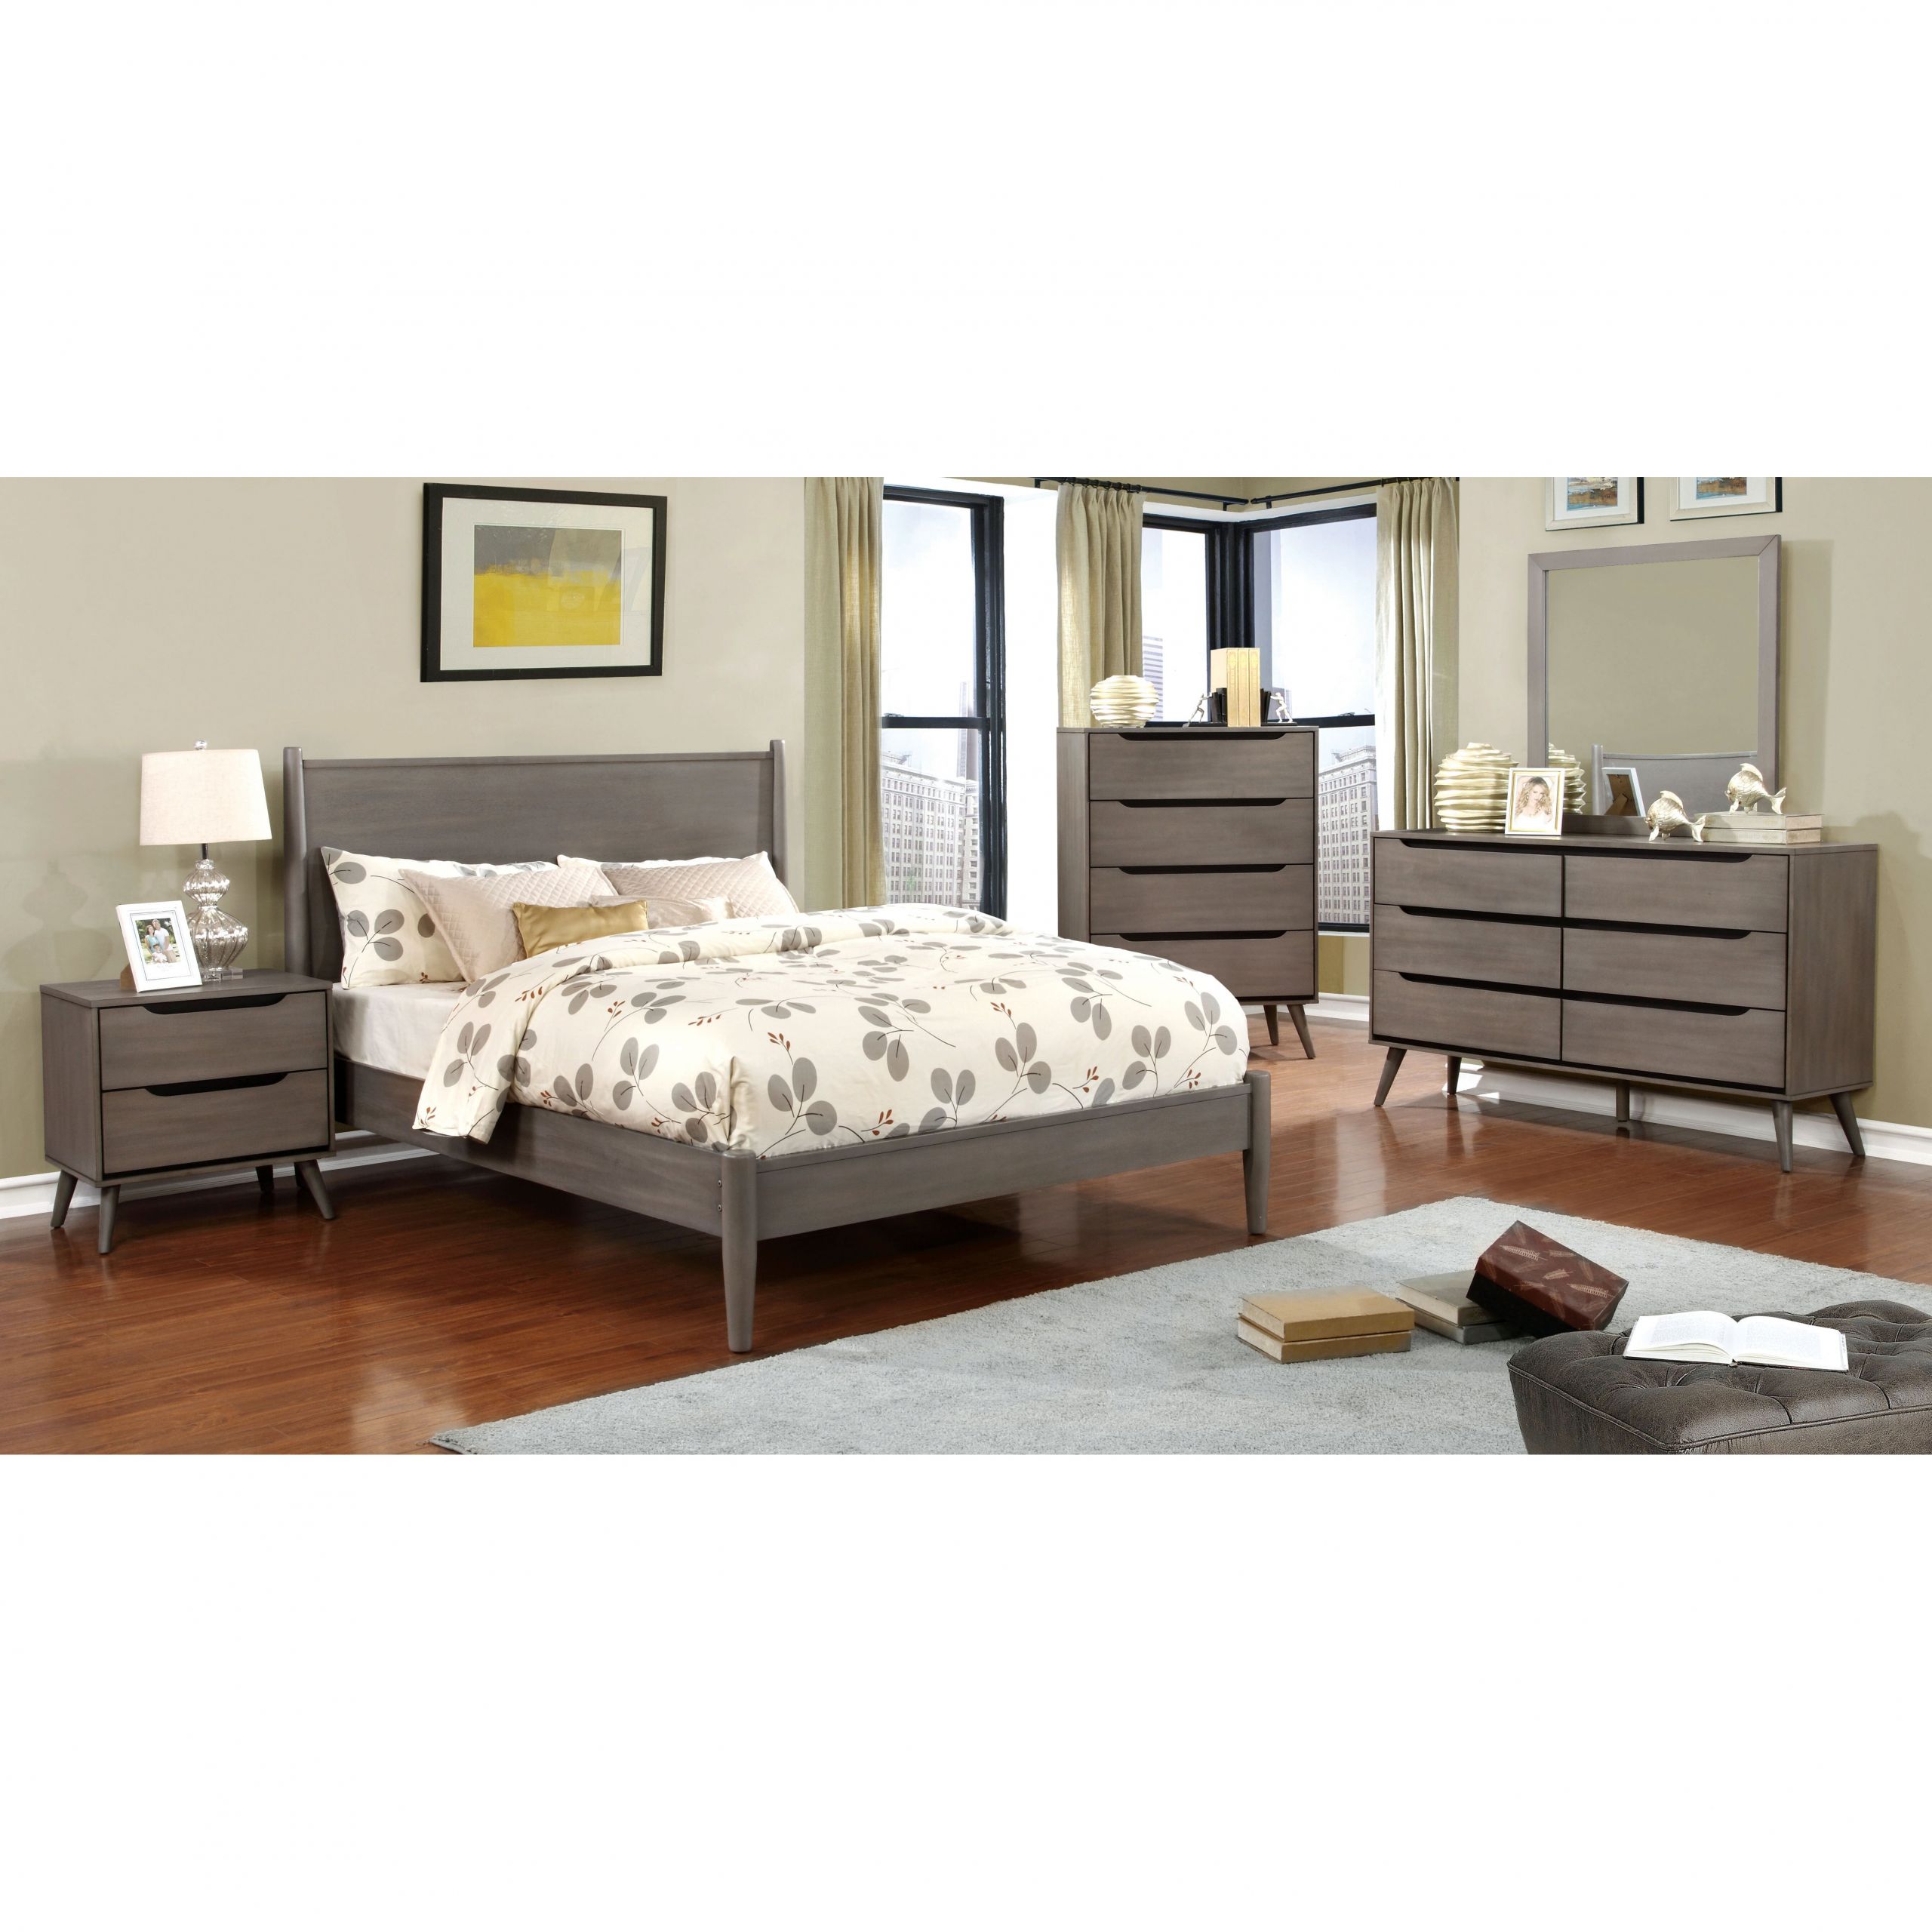 Mid Century Modern Bedroom Furniture
 Mercury Row Mason Mid Century Modern Platform Customizable